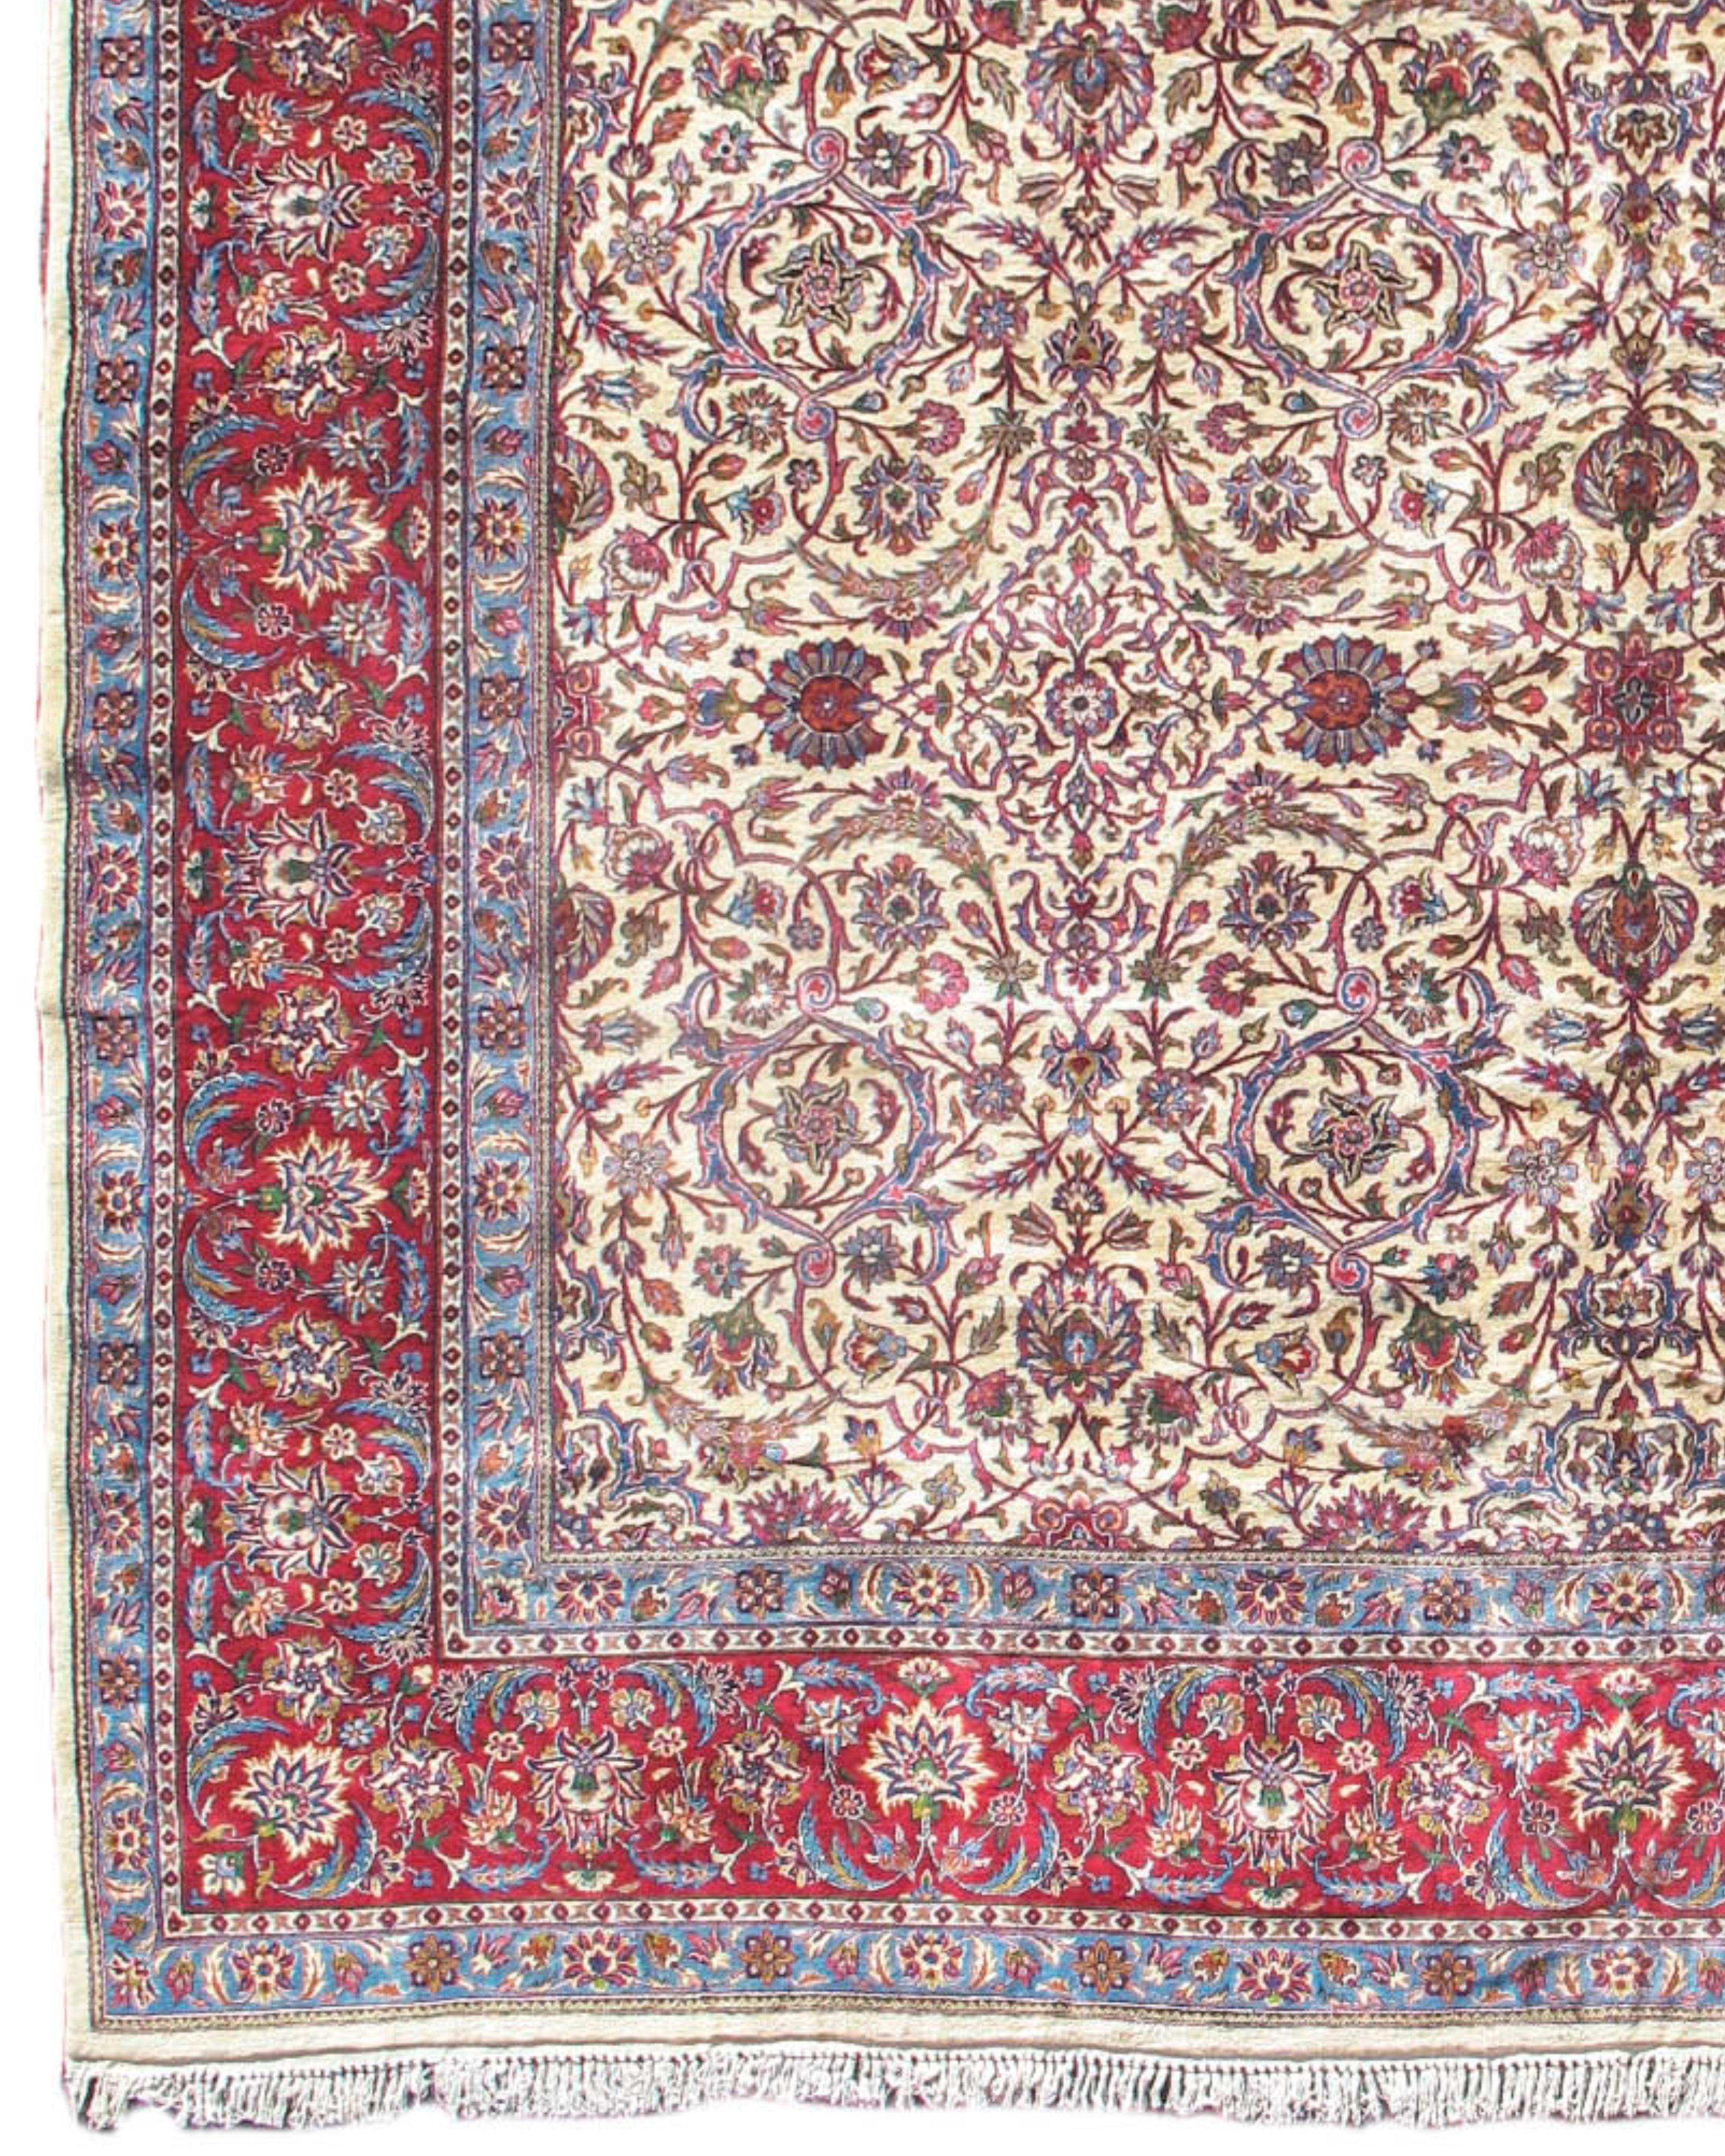 Persian Kirman Carpet Rug, Mid-20th Century

Original showroom condition

Additional Information:
Dimensions: 11'5